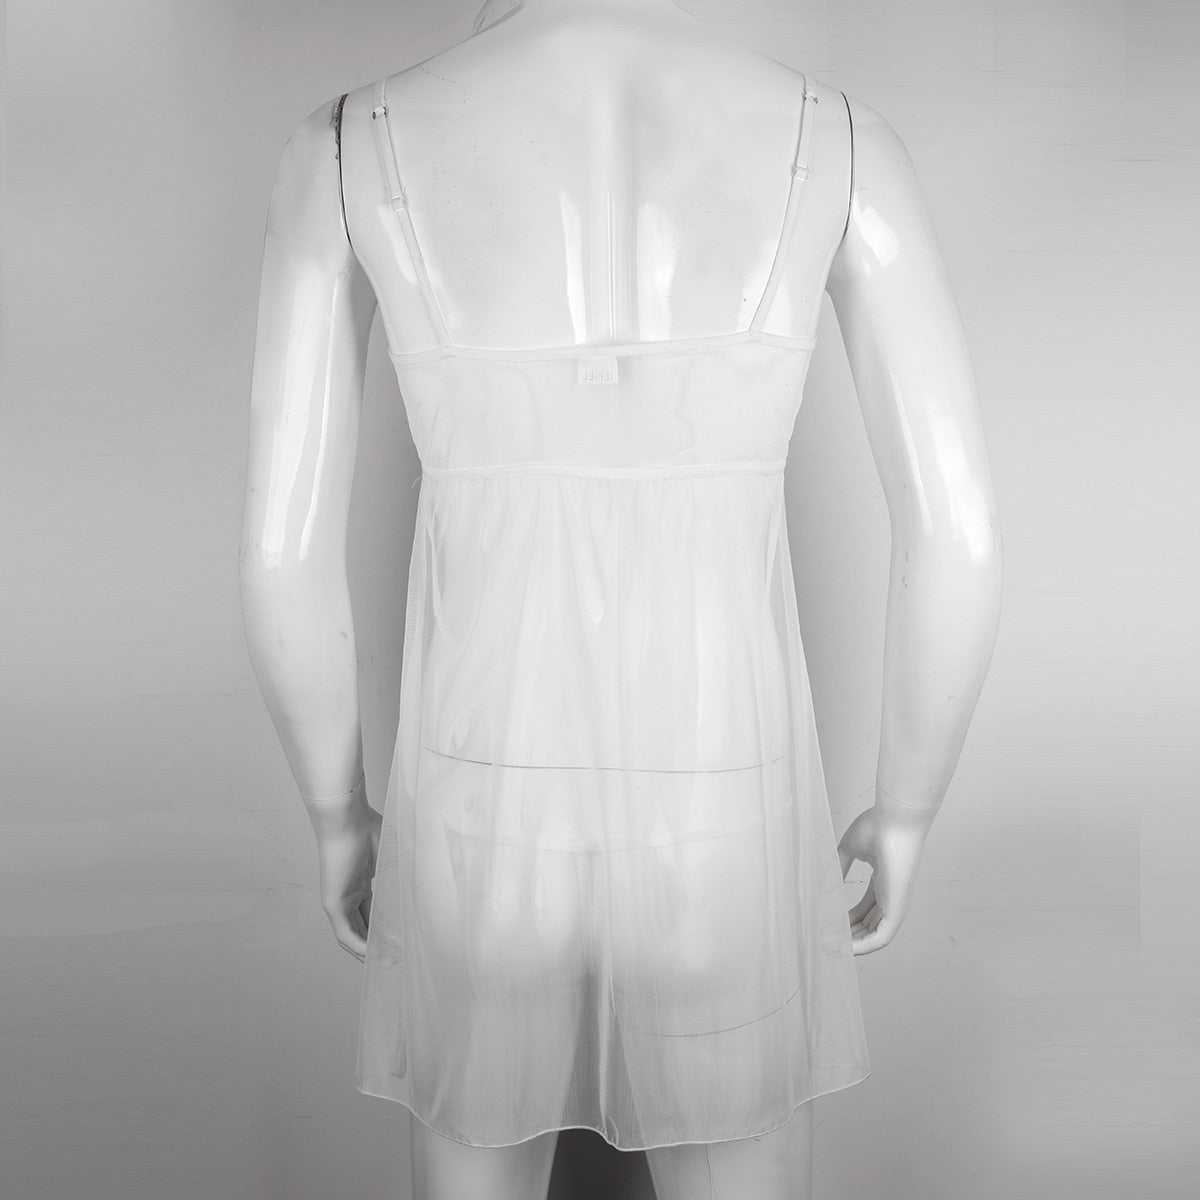 Sheer Mesh Lingerie Set: Crossdresser's Seductive Sleepwear